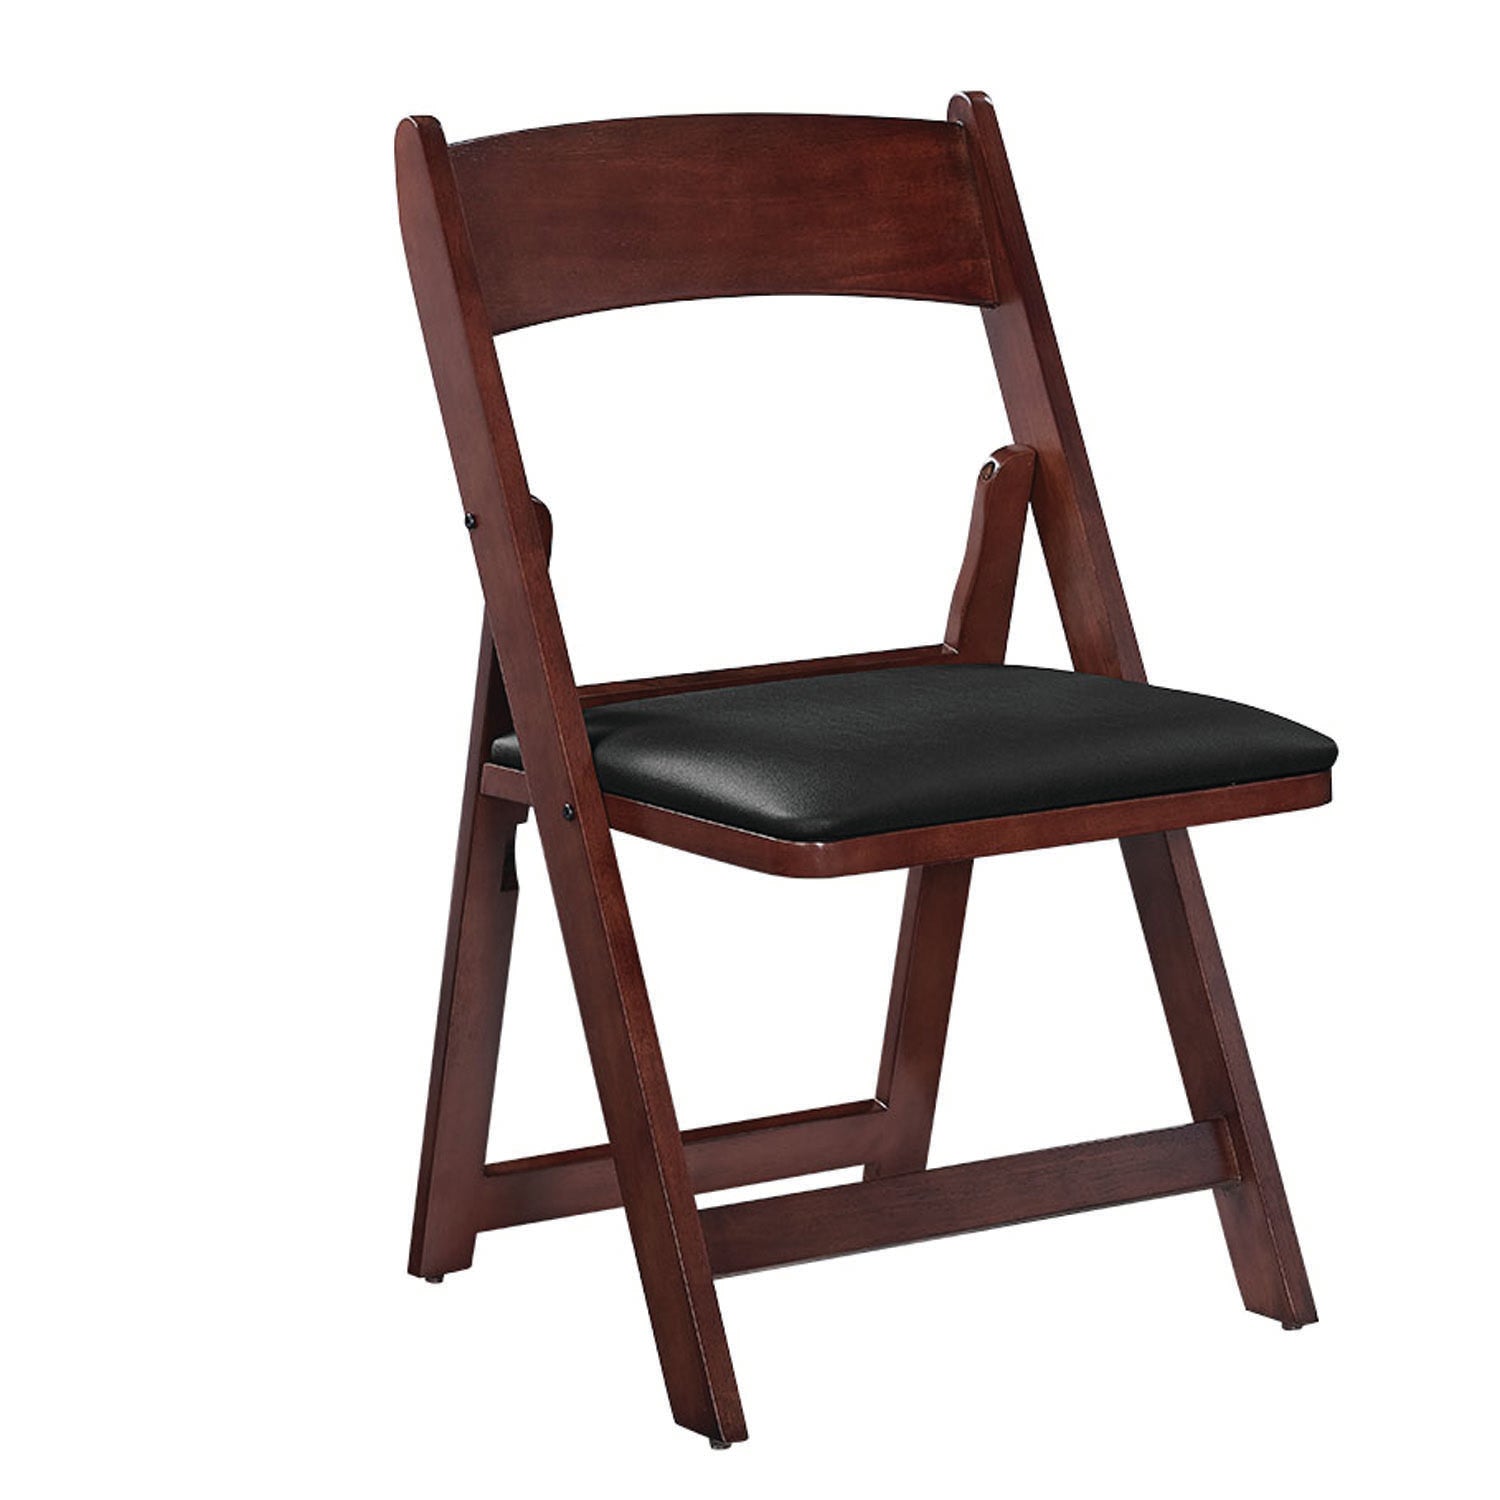 Wood vinyl padded folding chair in an English tudor finish.